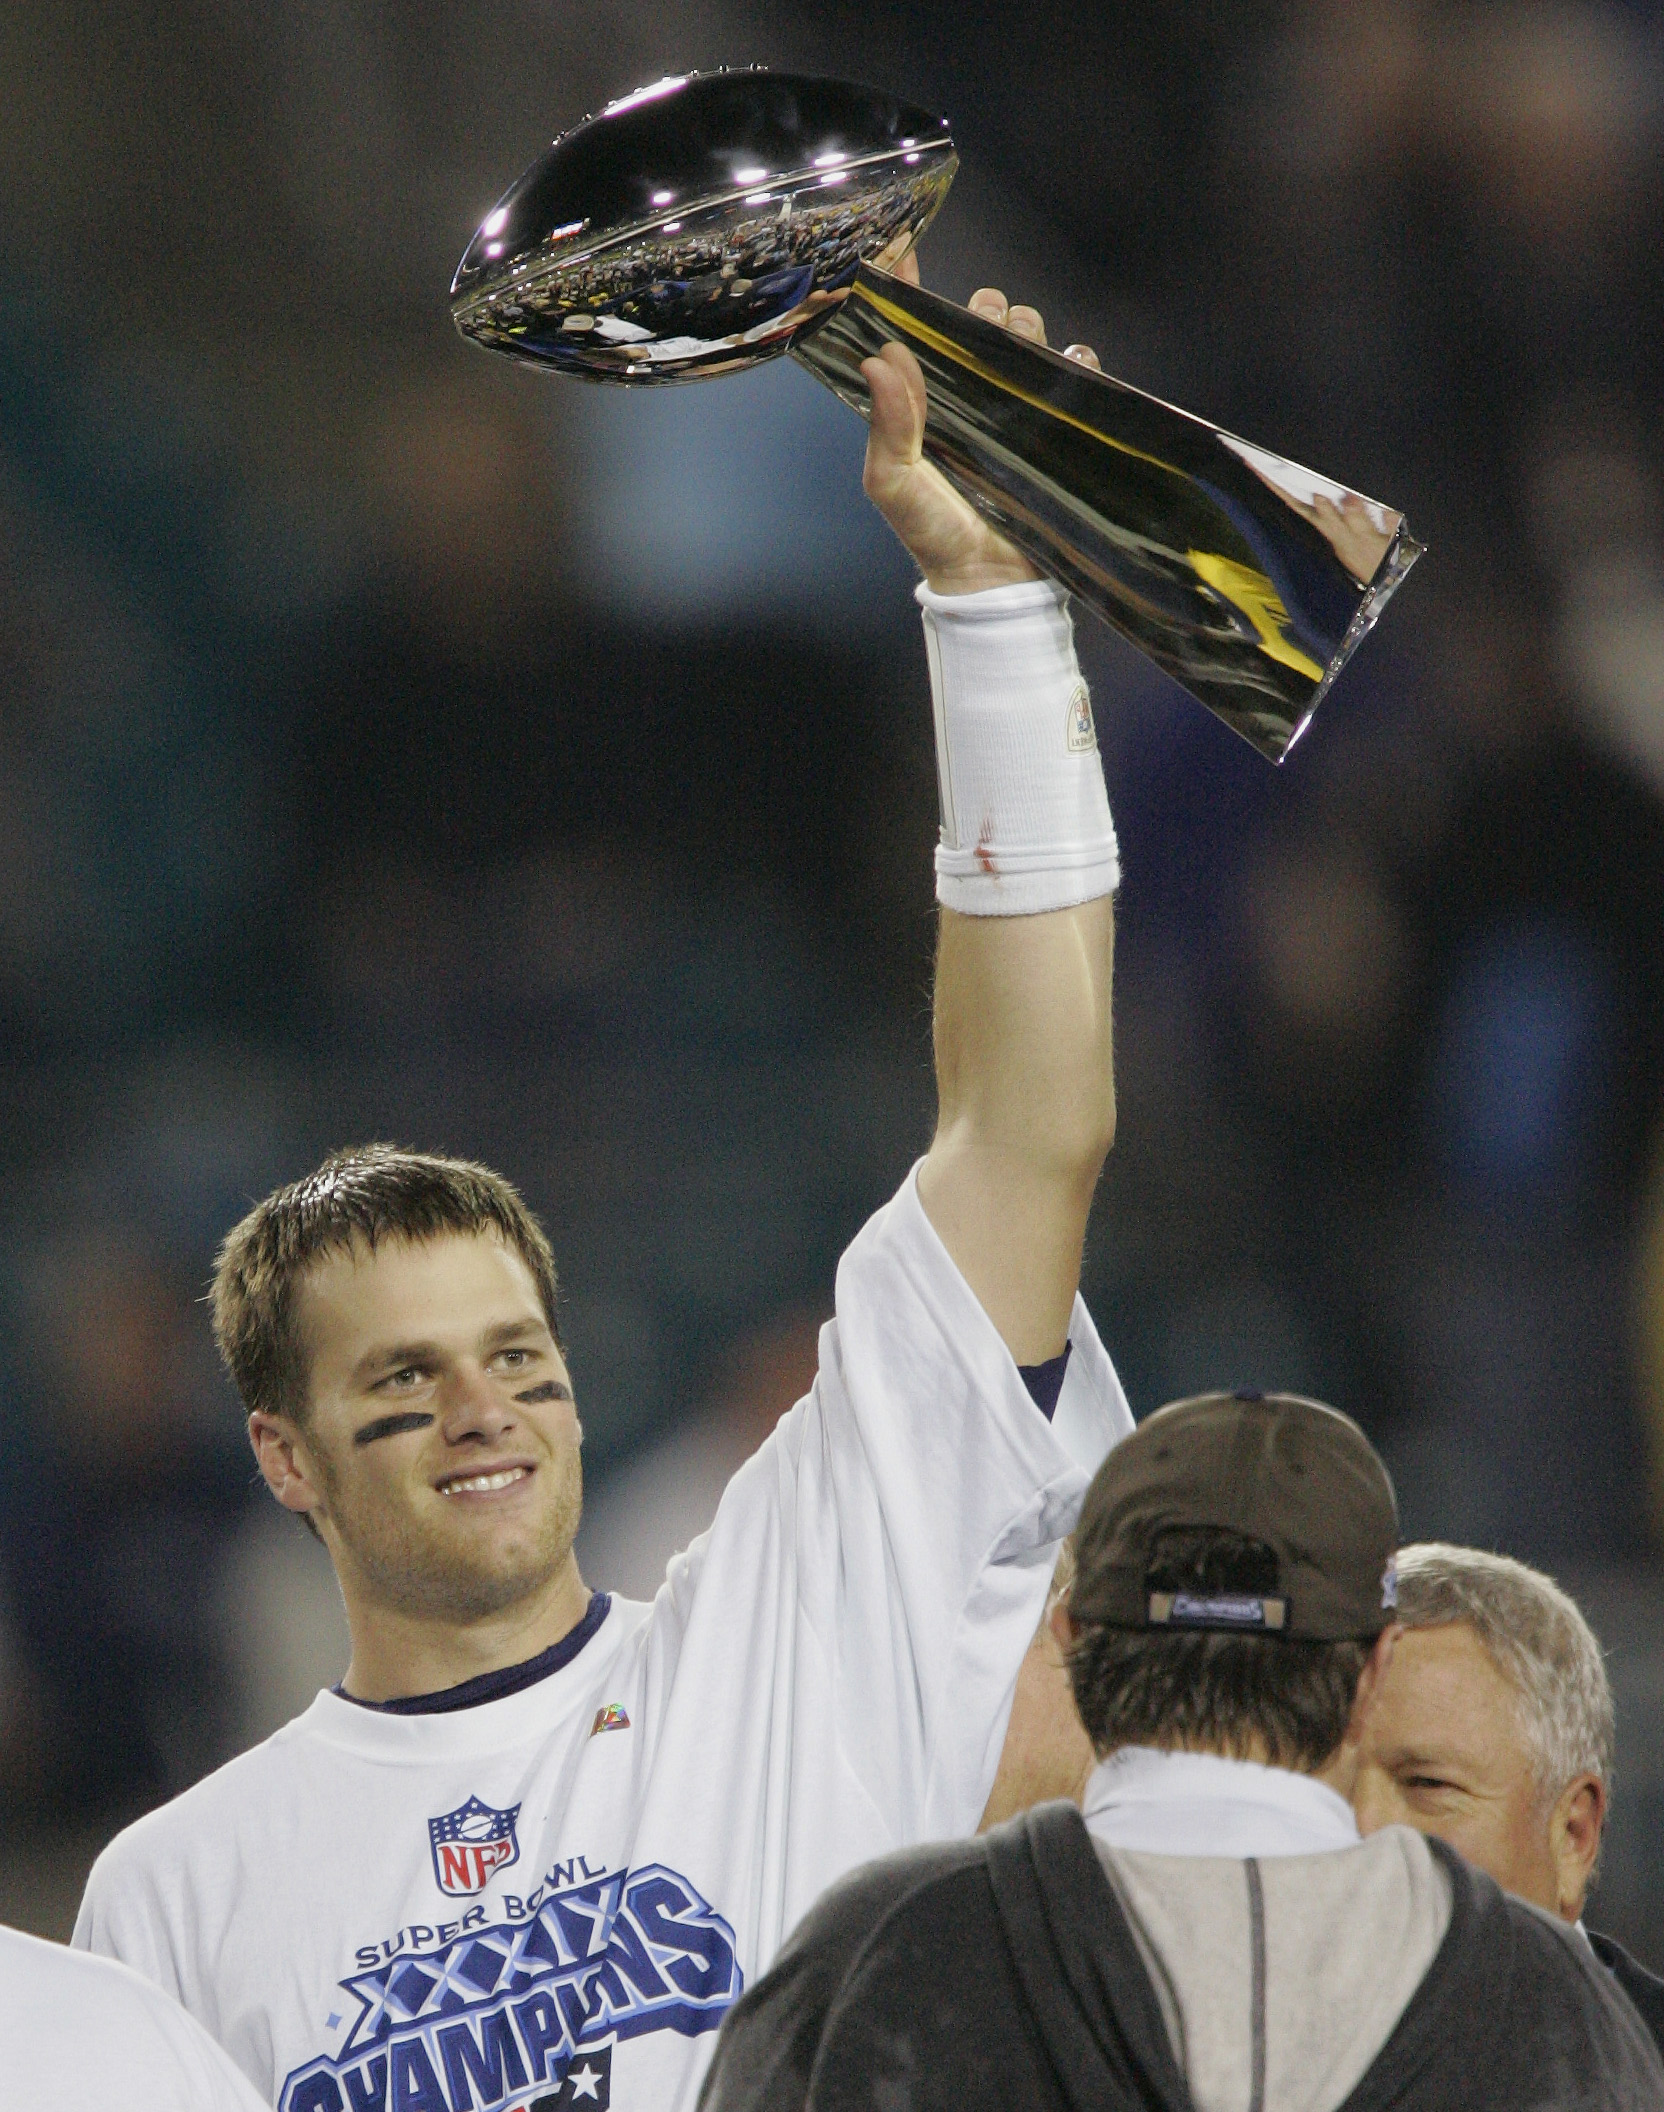 Ranking Tom Brady's 9 Super Bowl performances